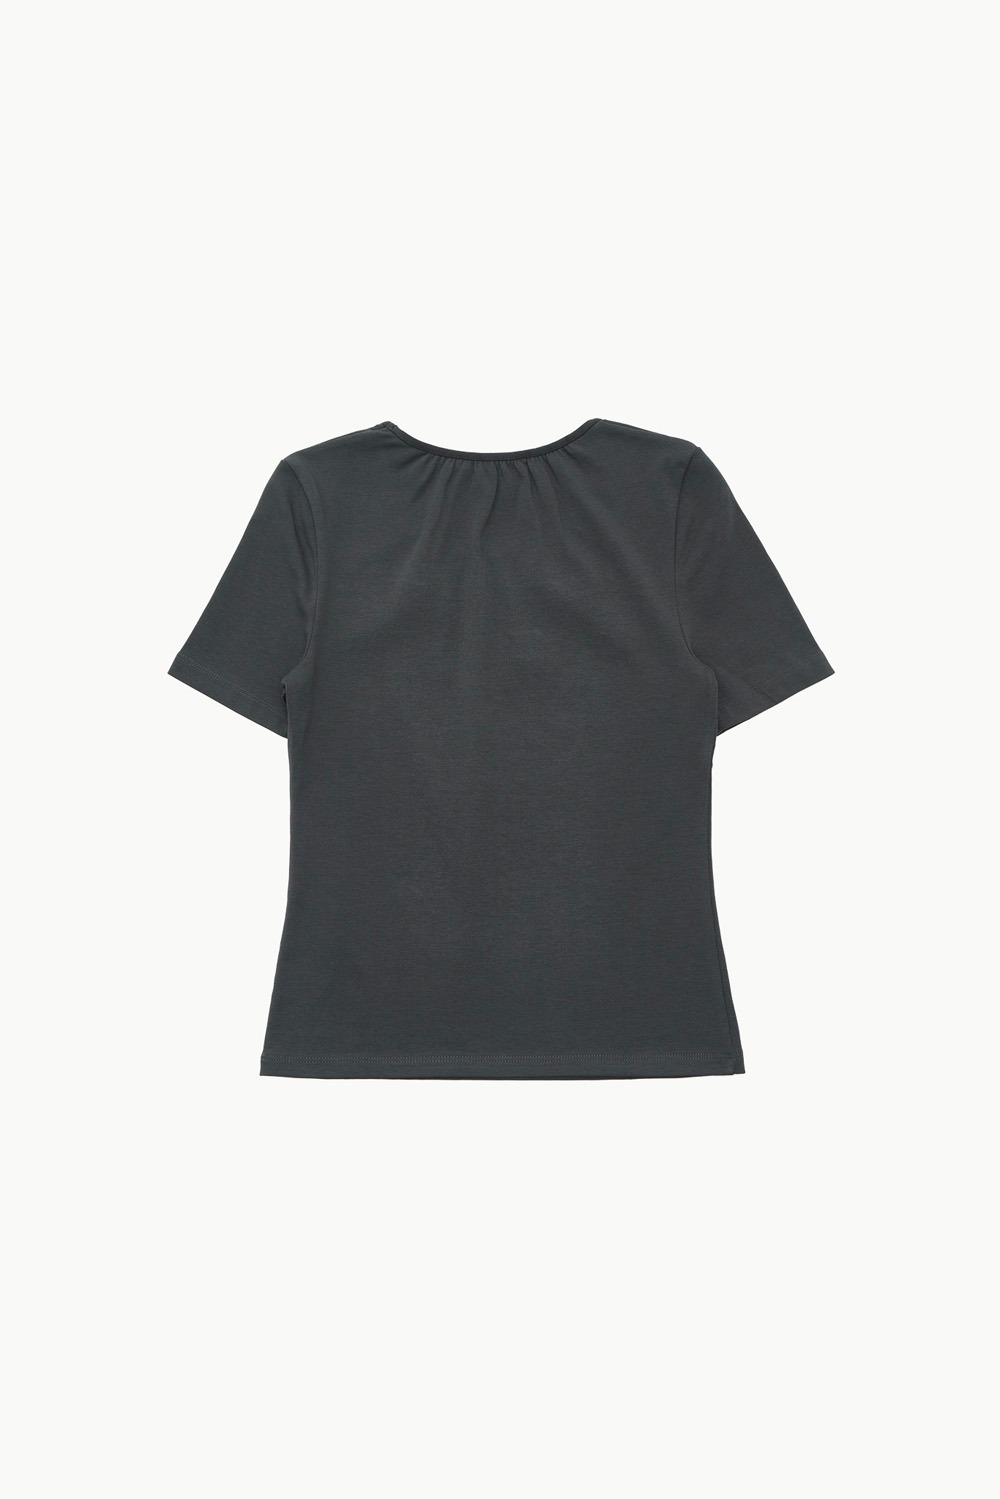 Neck Shirring Short Sleeve Top-Charcoal